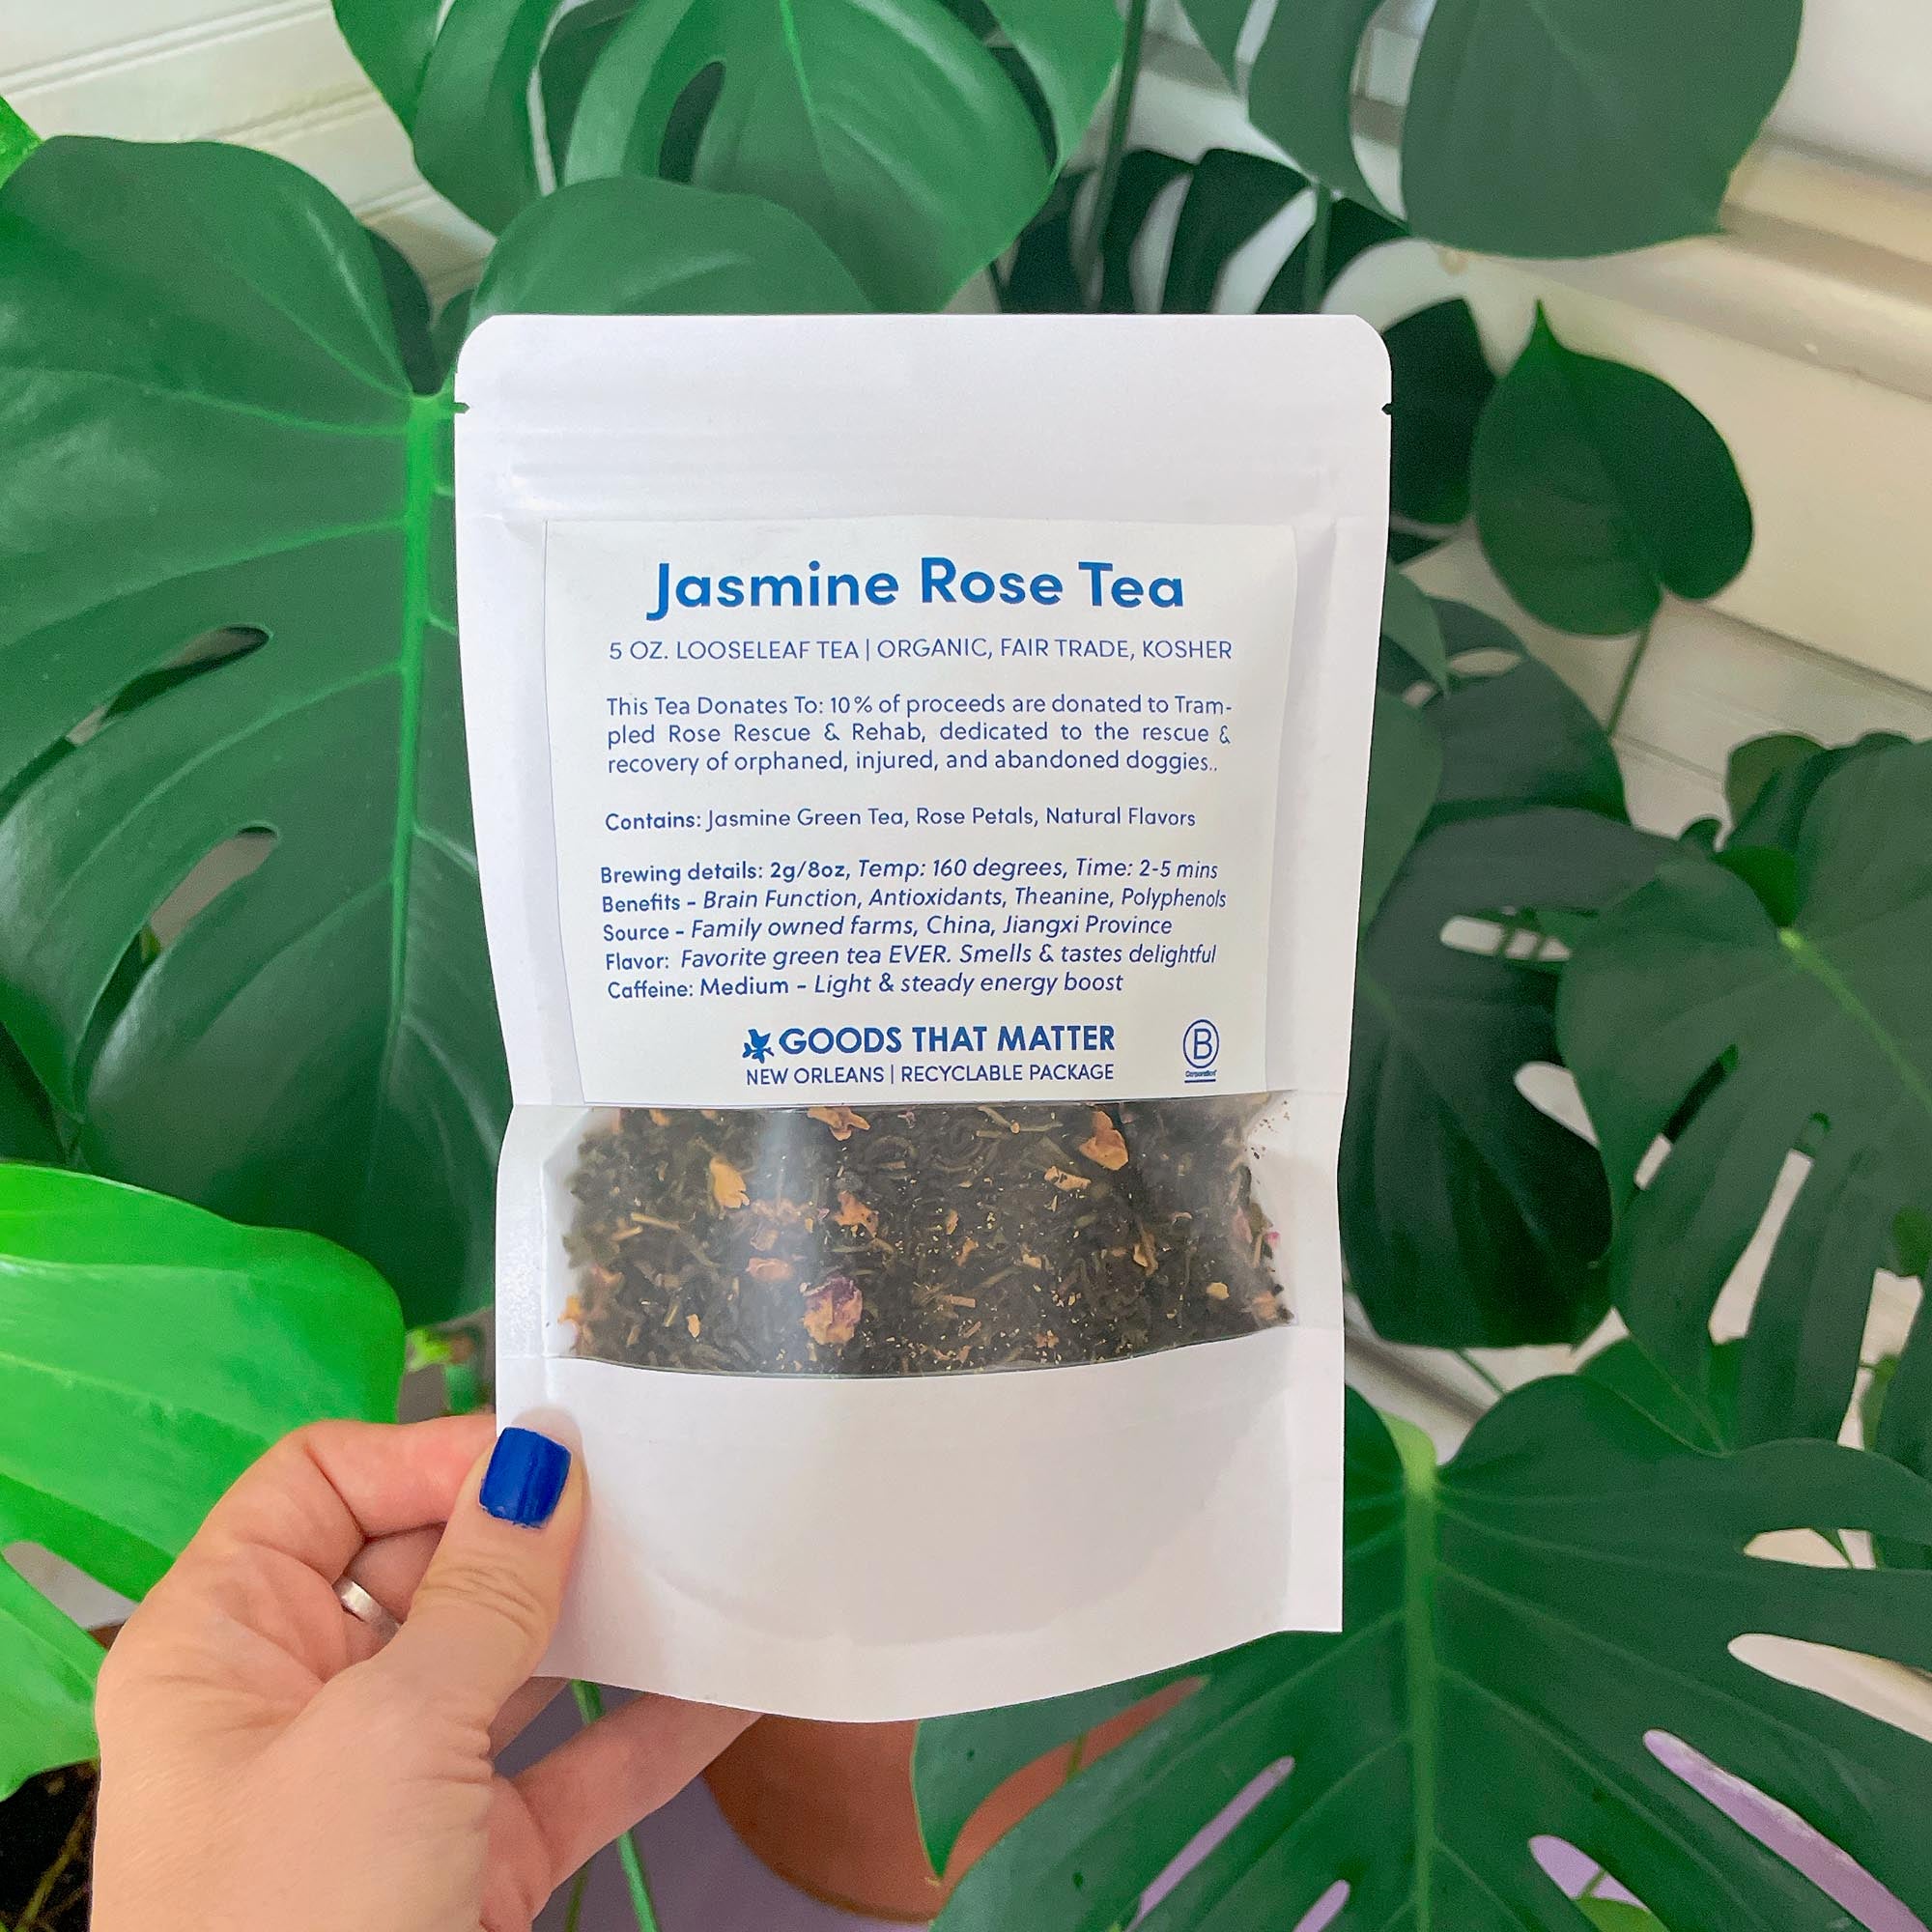 Jasmine Rose Looseleaf Benevolent Tea - Gives to Trampled Rose Rescue & Rehab